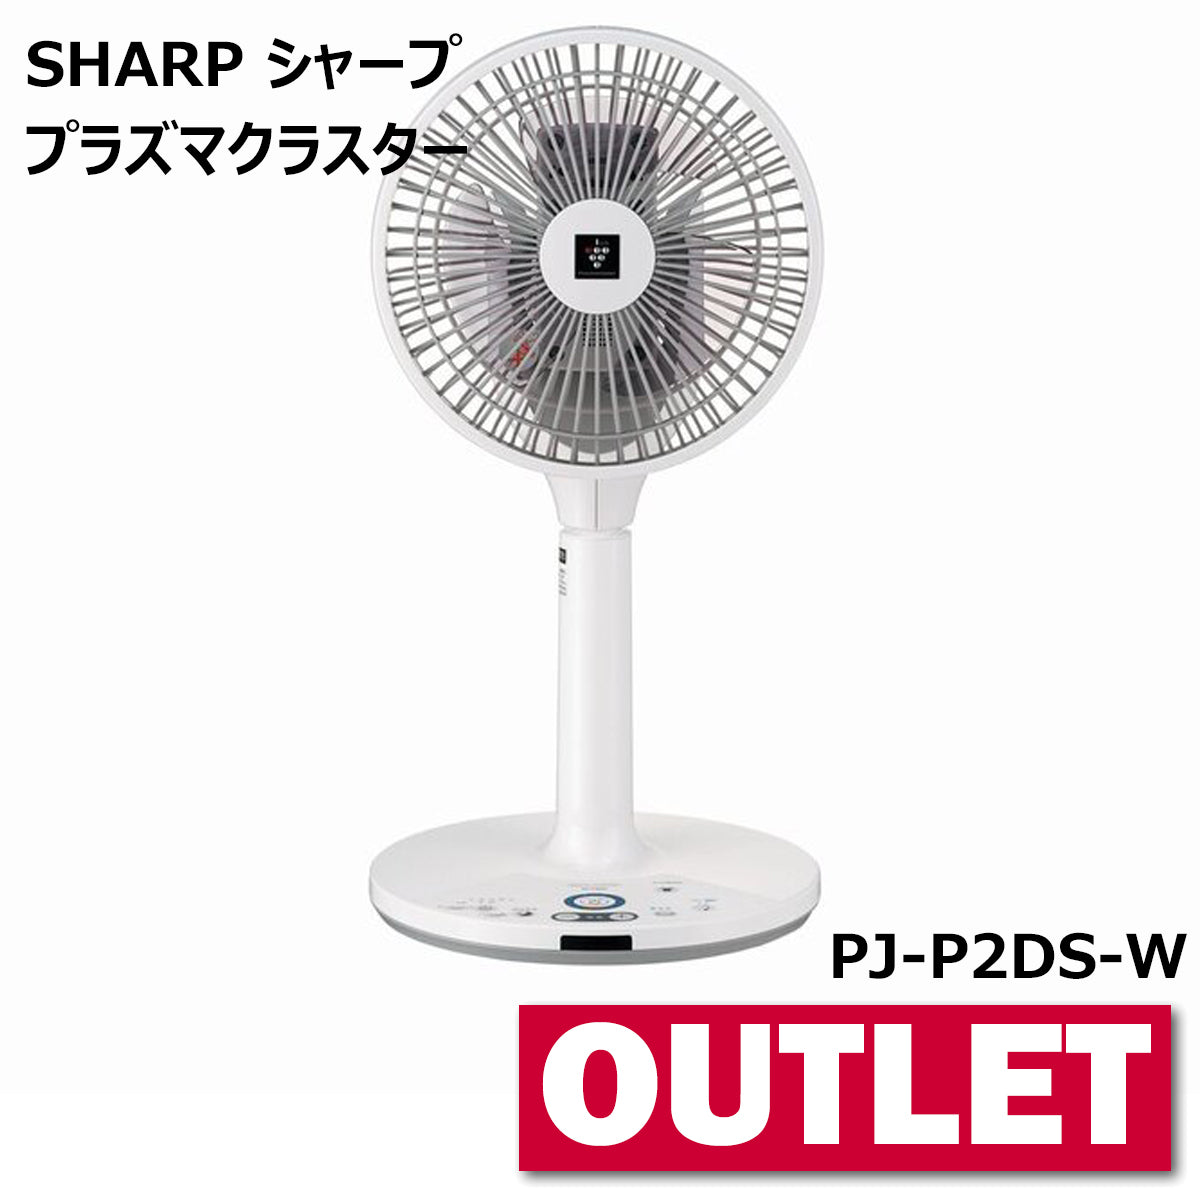 SHARP シャープ プラズマクラスター 扇風機 PJ-J2DS